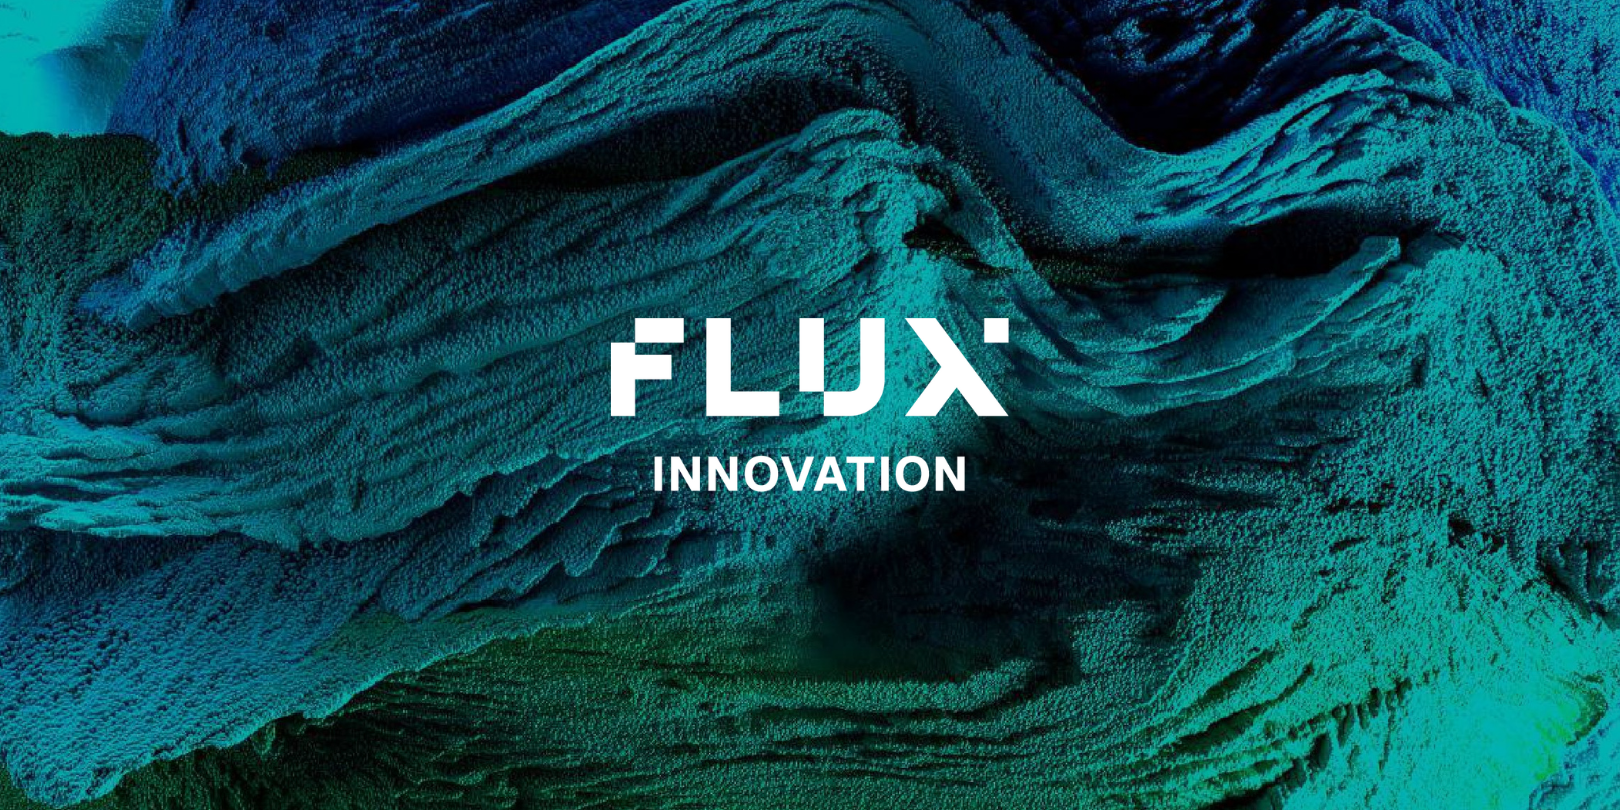 Flux Announces Evolution into “Innovation as a Service” Model